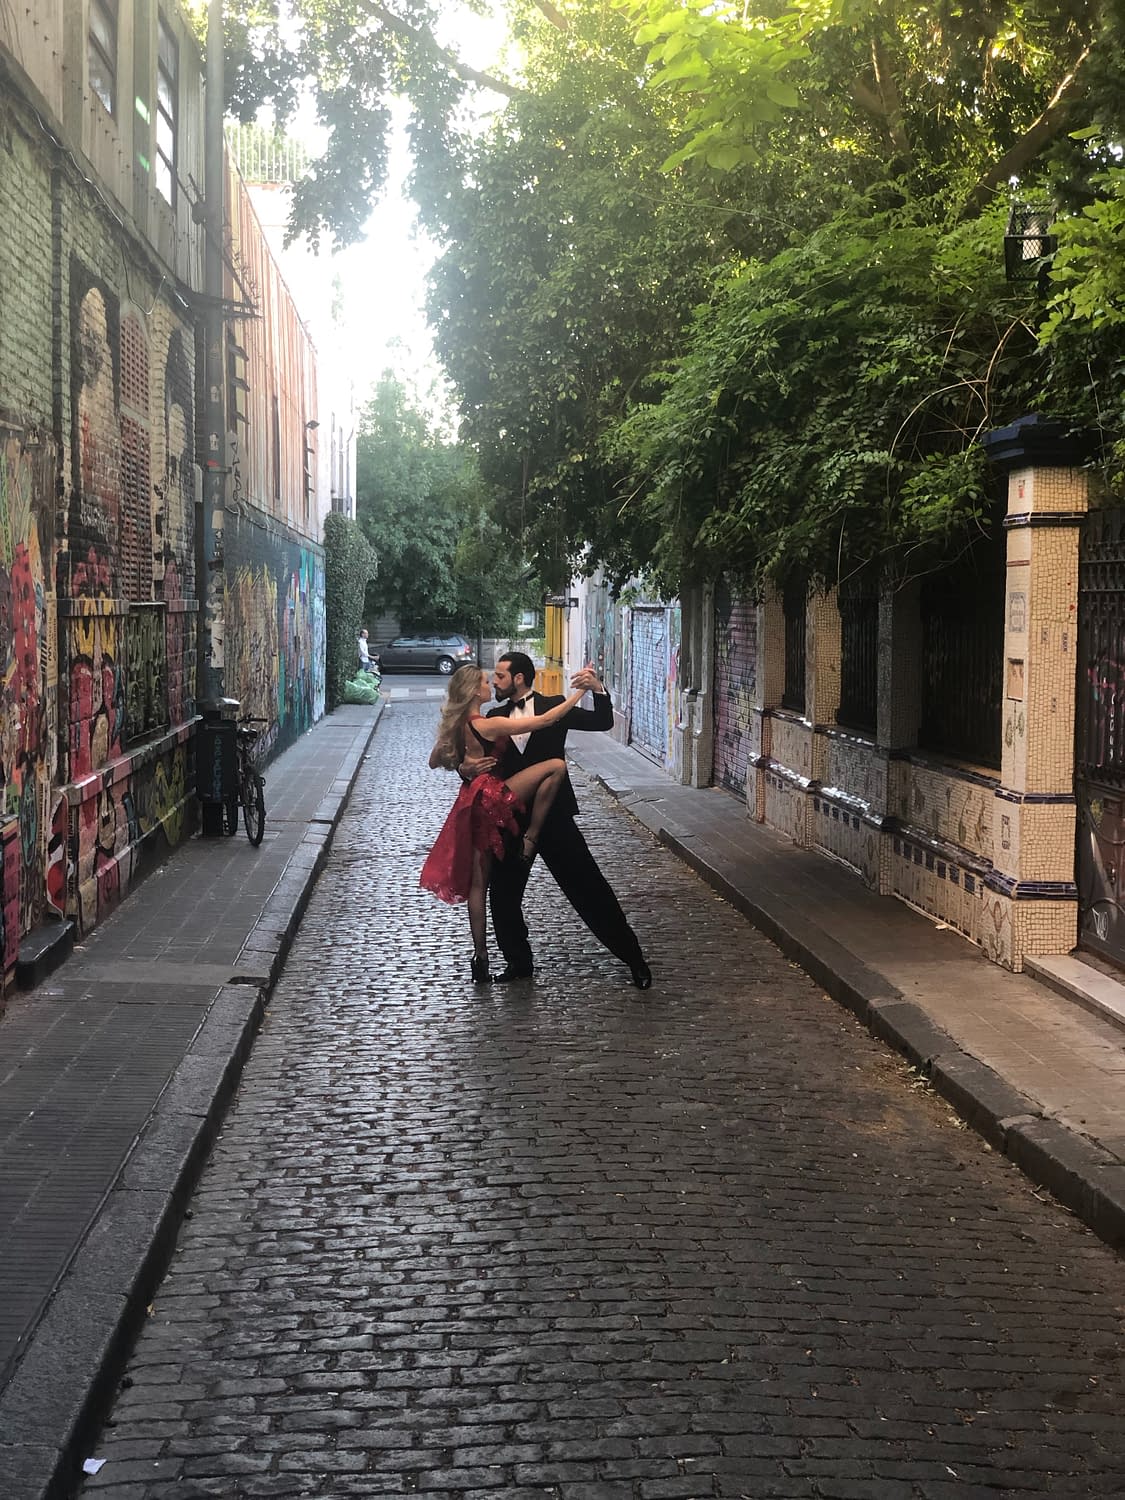 man and woman dancing tango in the street